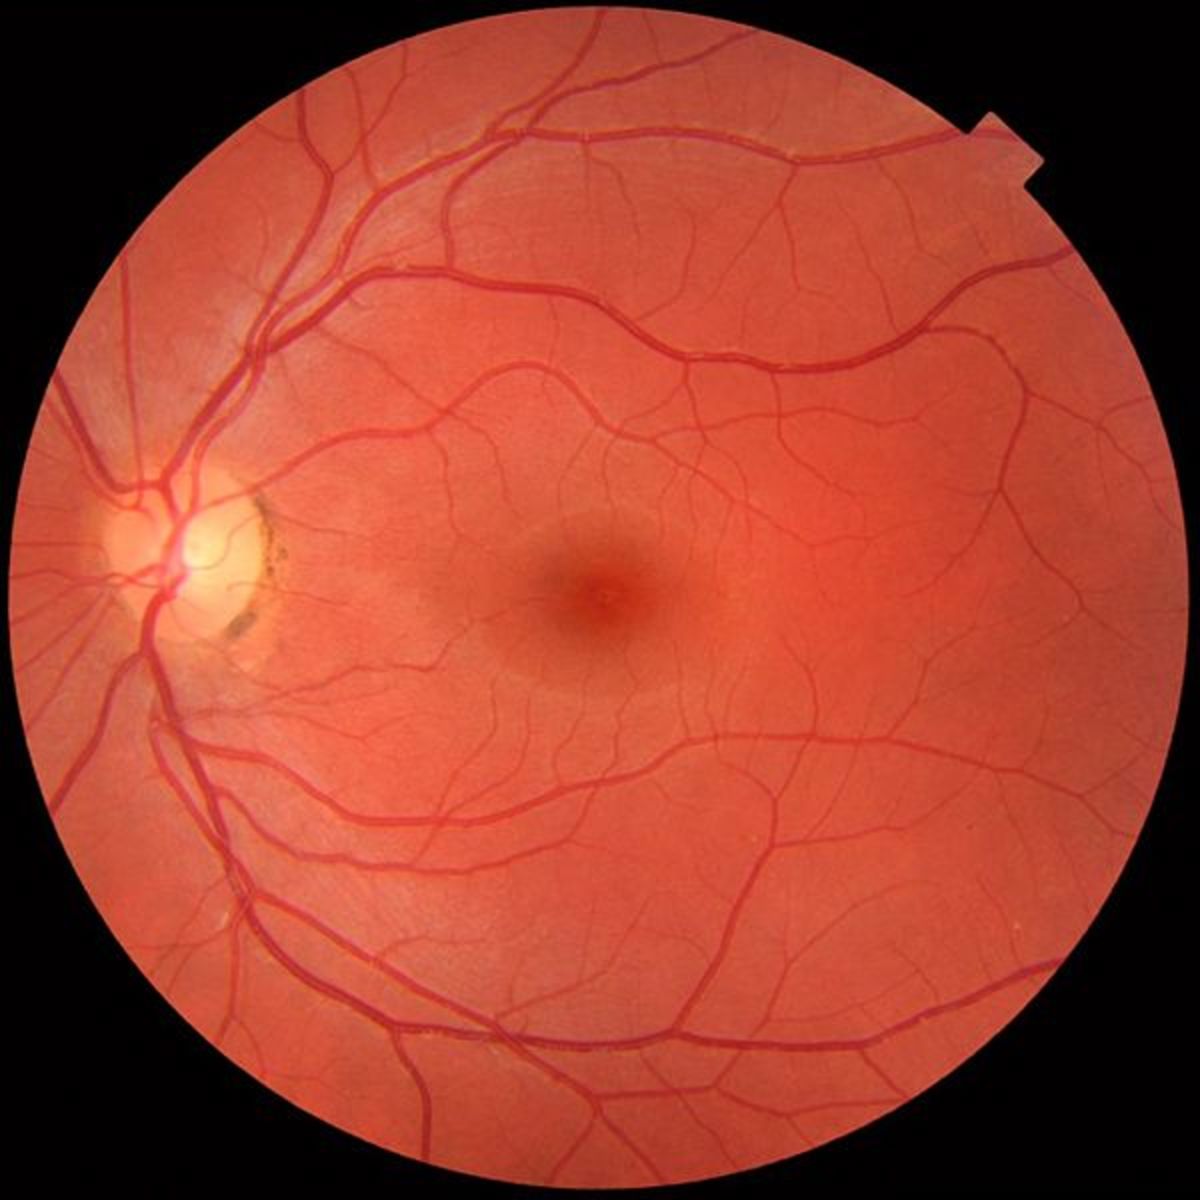 Definition of Retina